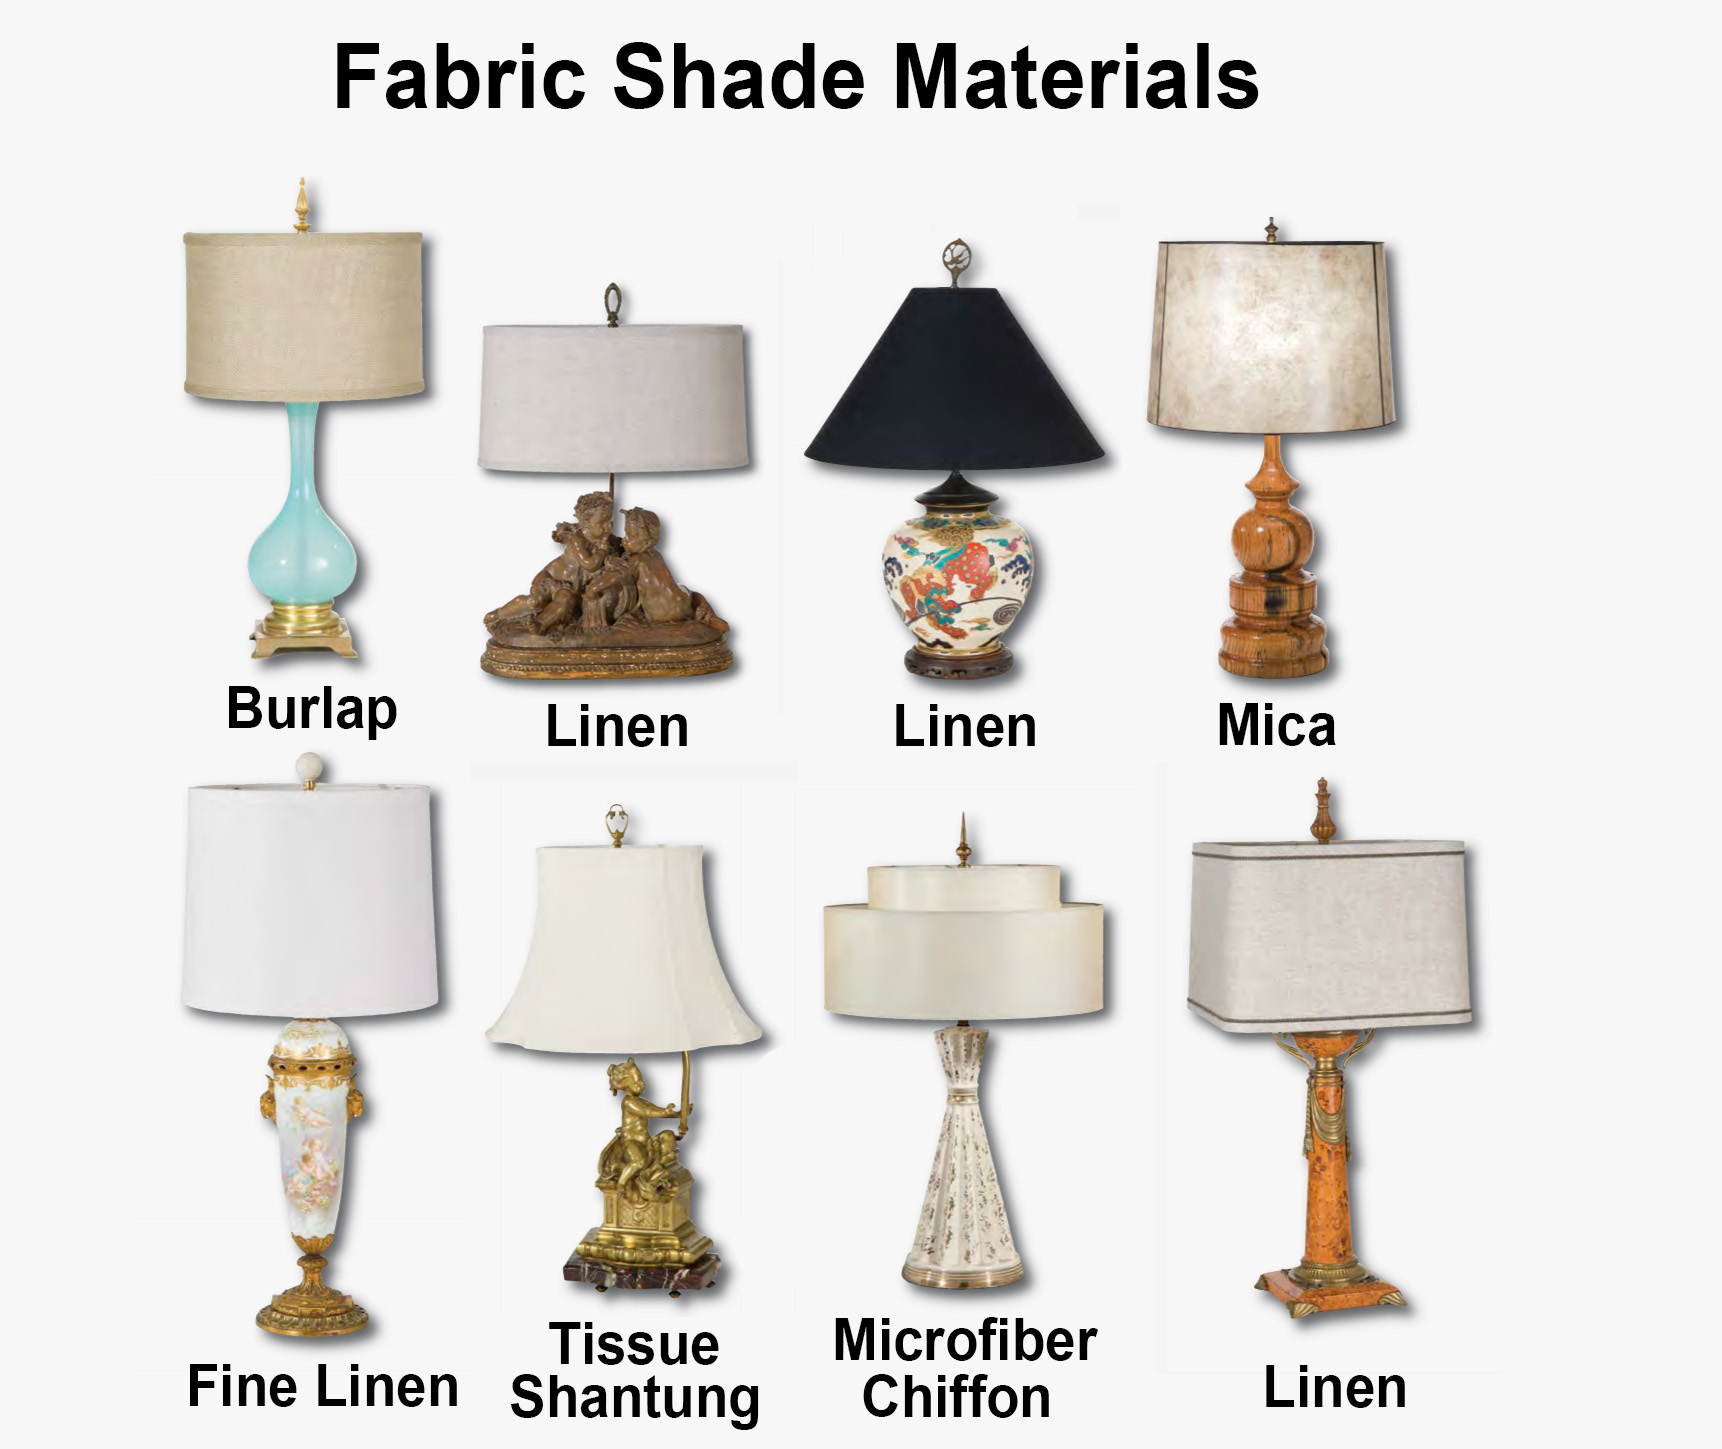 Fabricshades and Materials to make them